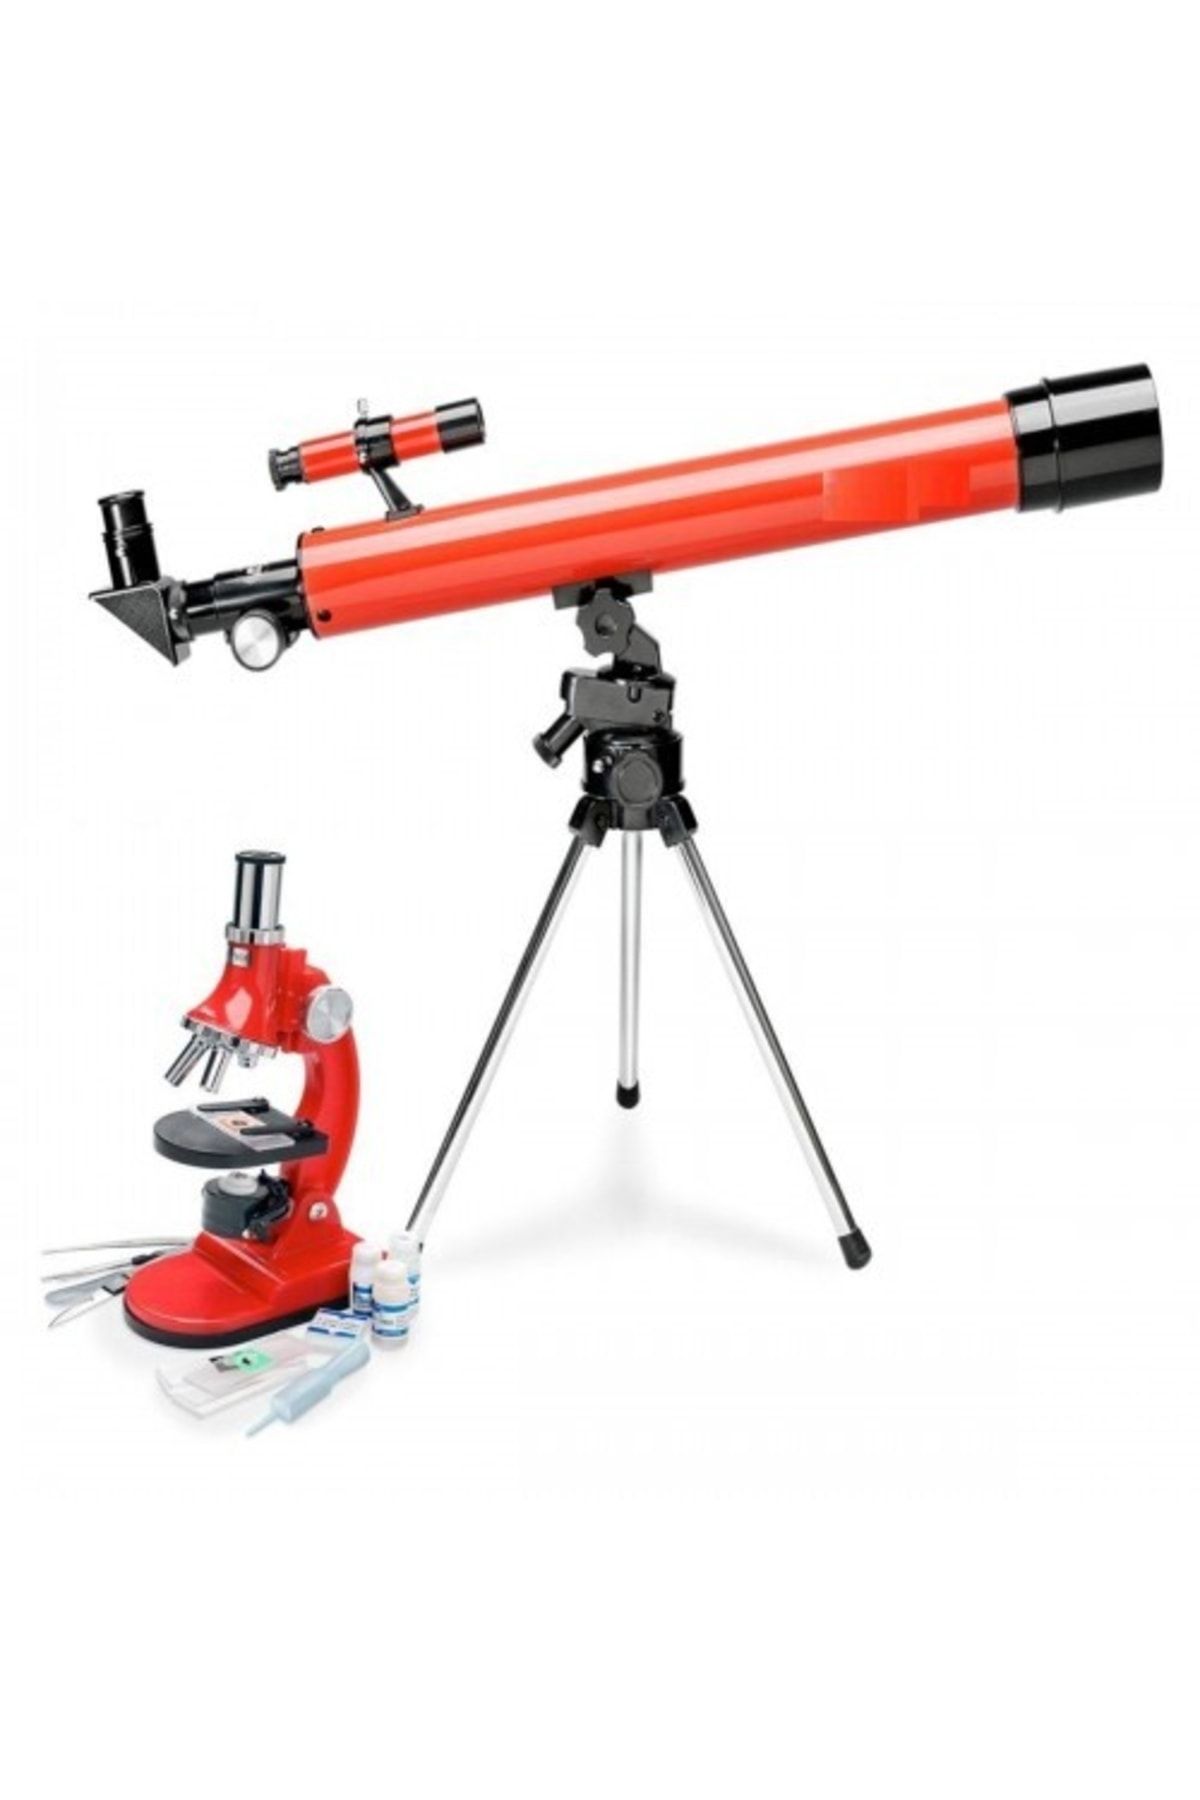 Genel Markalar 500x50 Teleskop & Mikroskop Set